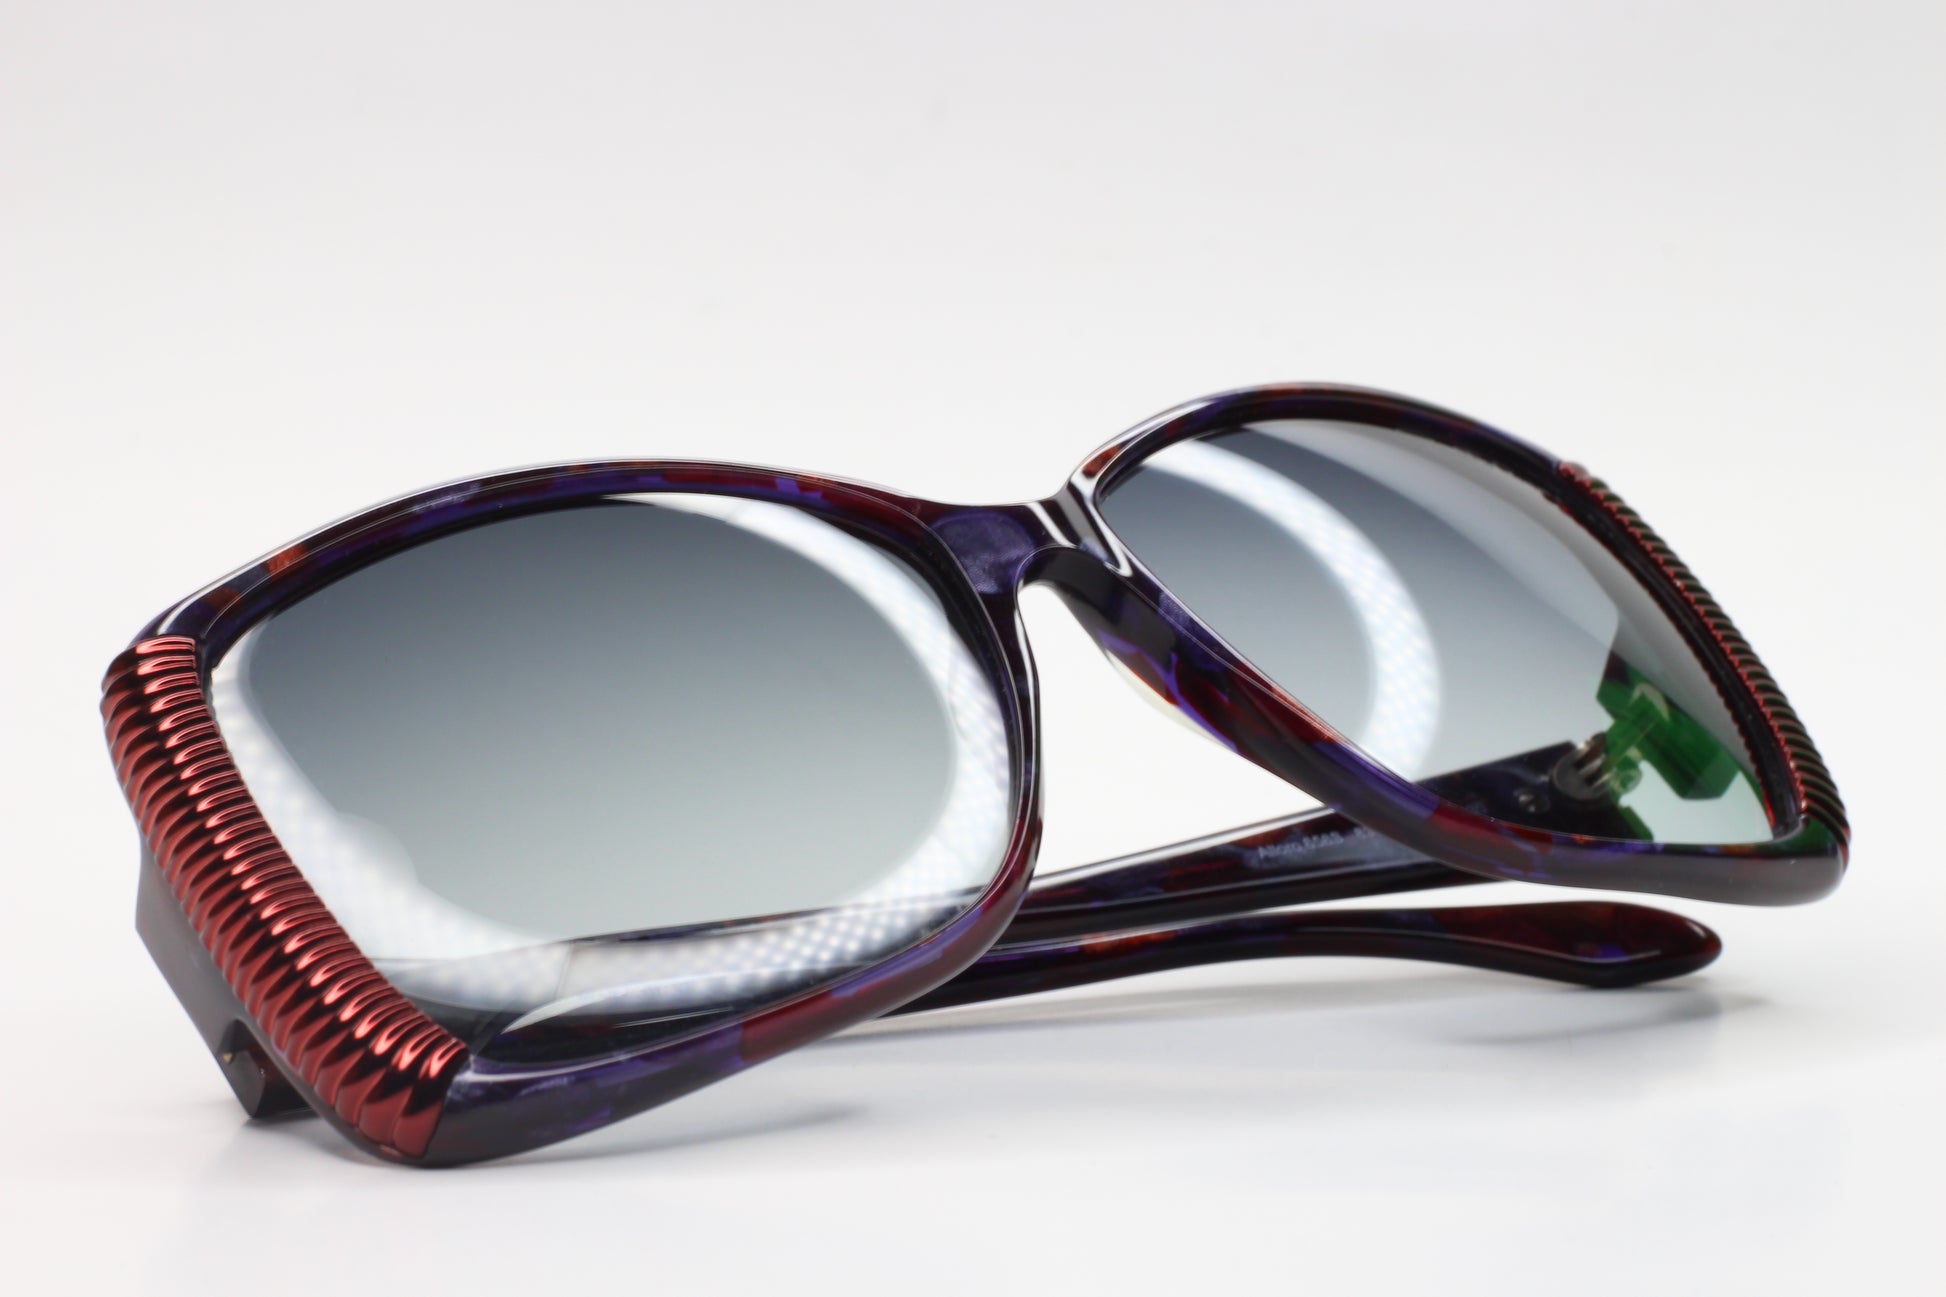 Roberto Cavalli RC656S 83B Alloro Designer Shimmery Purple Luxury Sunglasses - ABC Optical